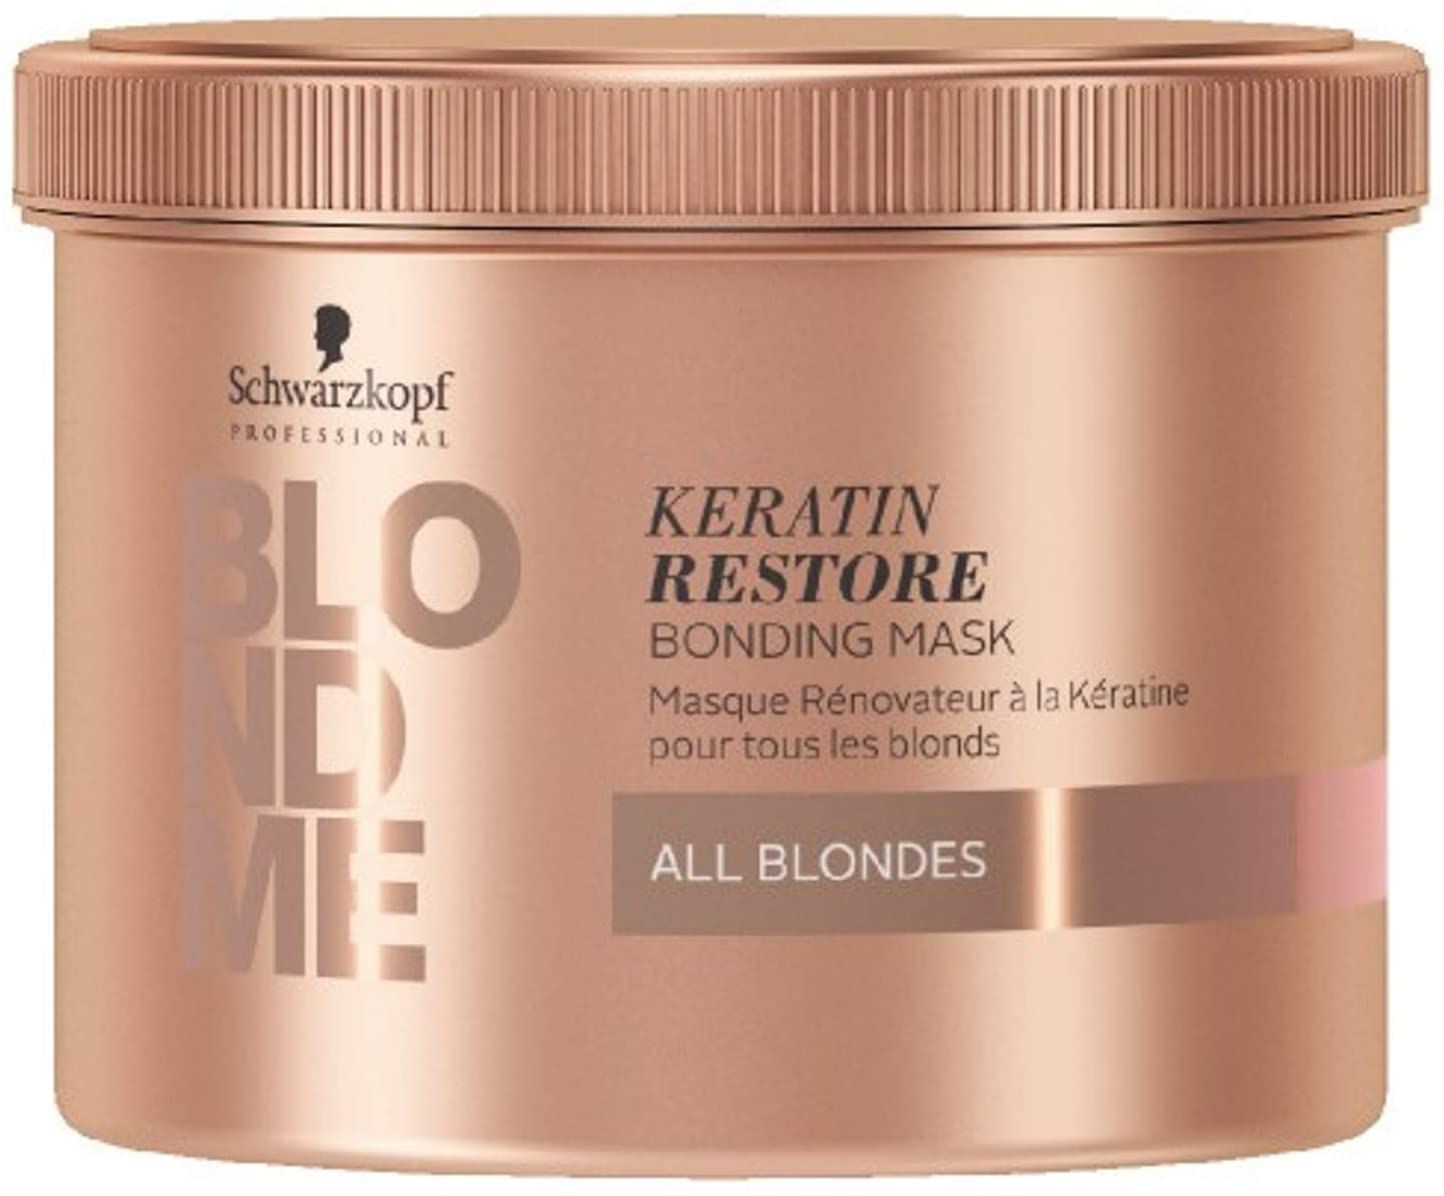 BLONDME All Blondes Keratin Restore Bonding Mask 500ml